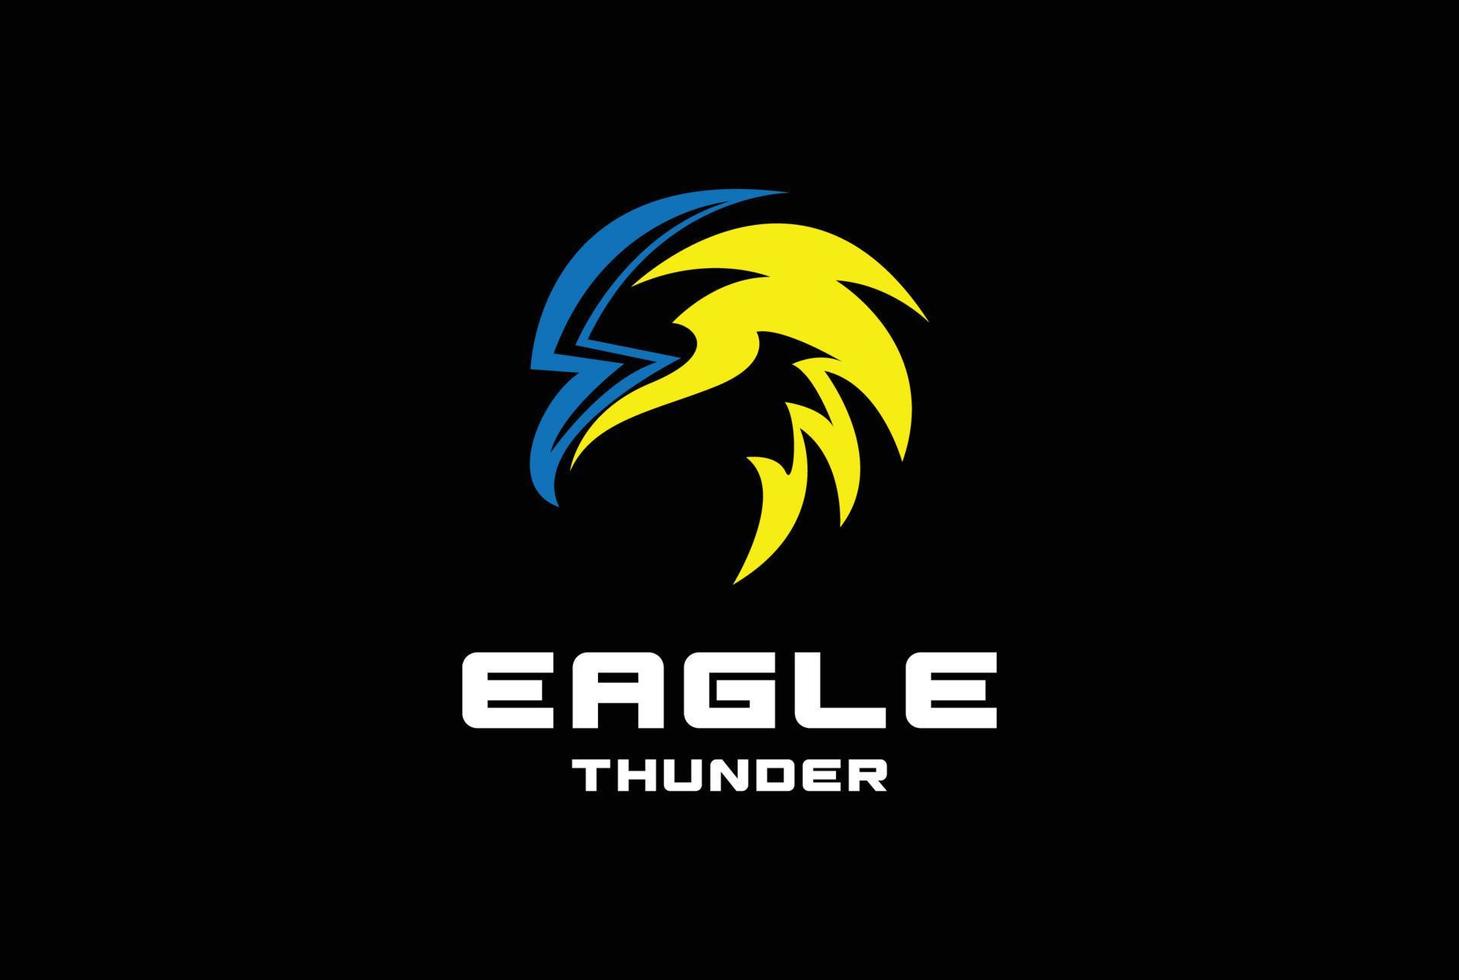 Electric Thunder Light Eagle Hawk Falcon Head for Sport Brand Logo Design vector